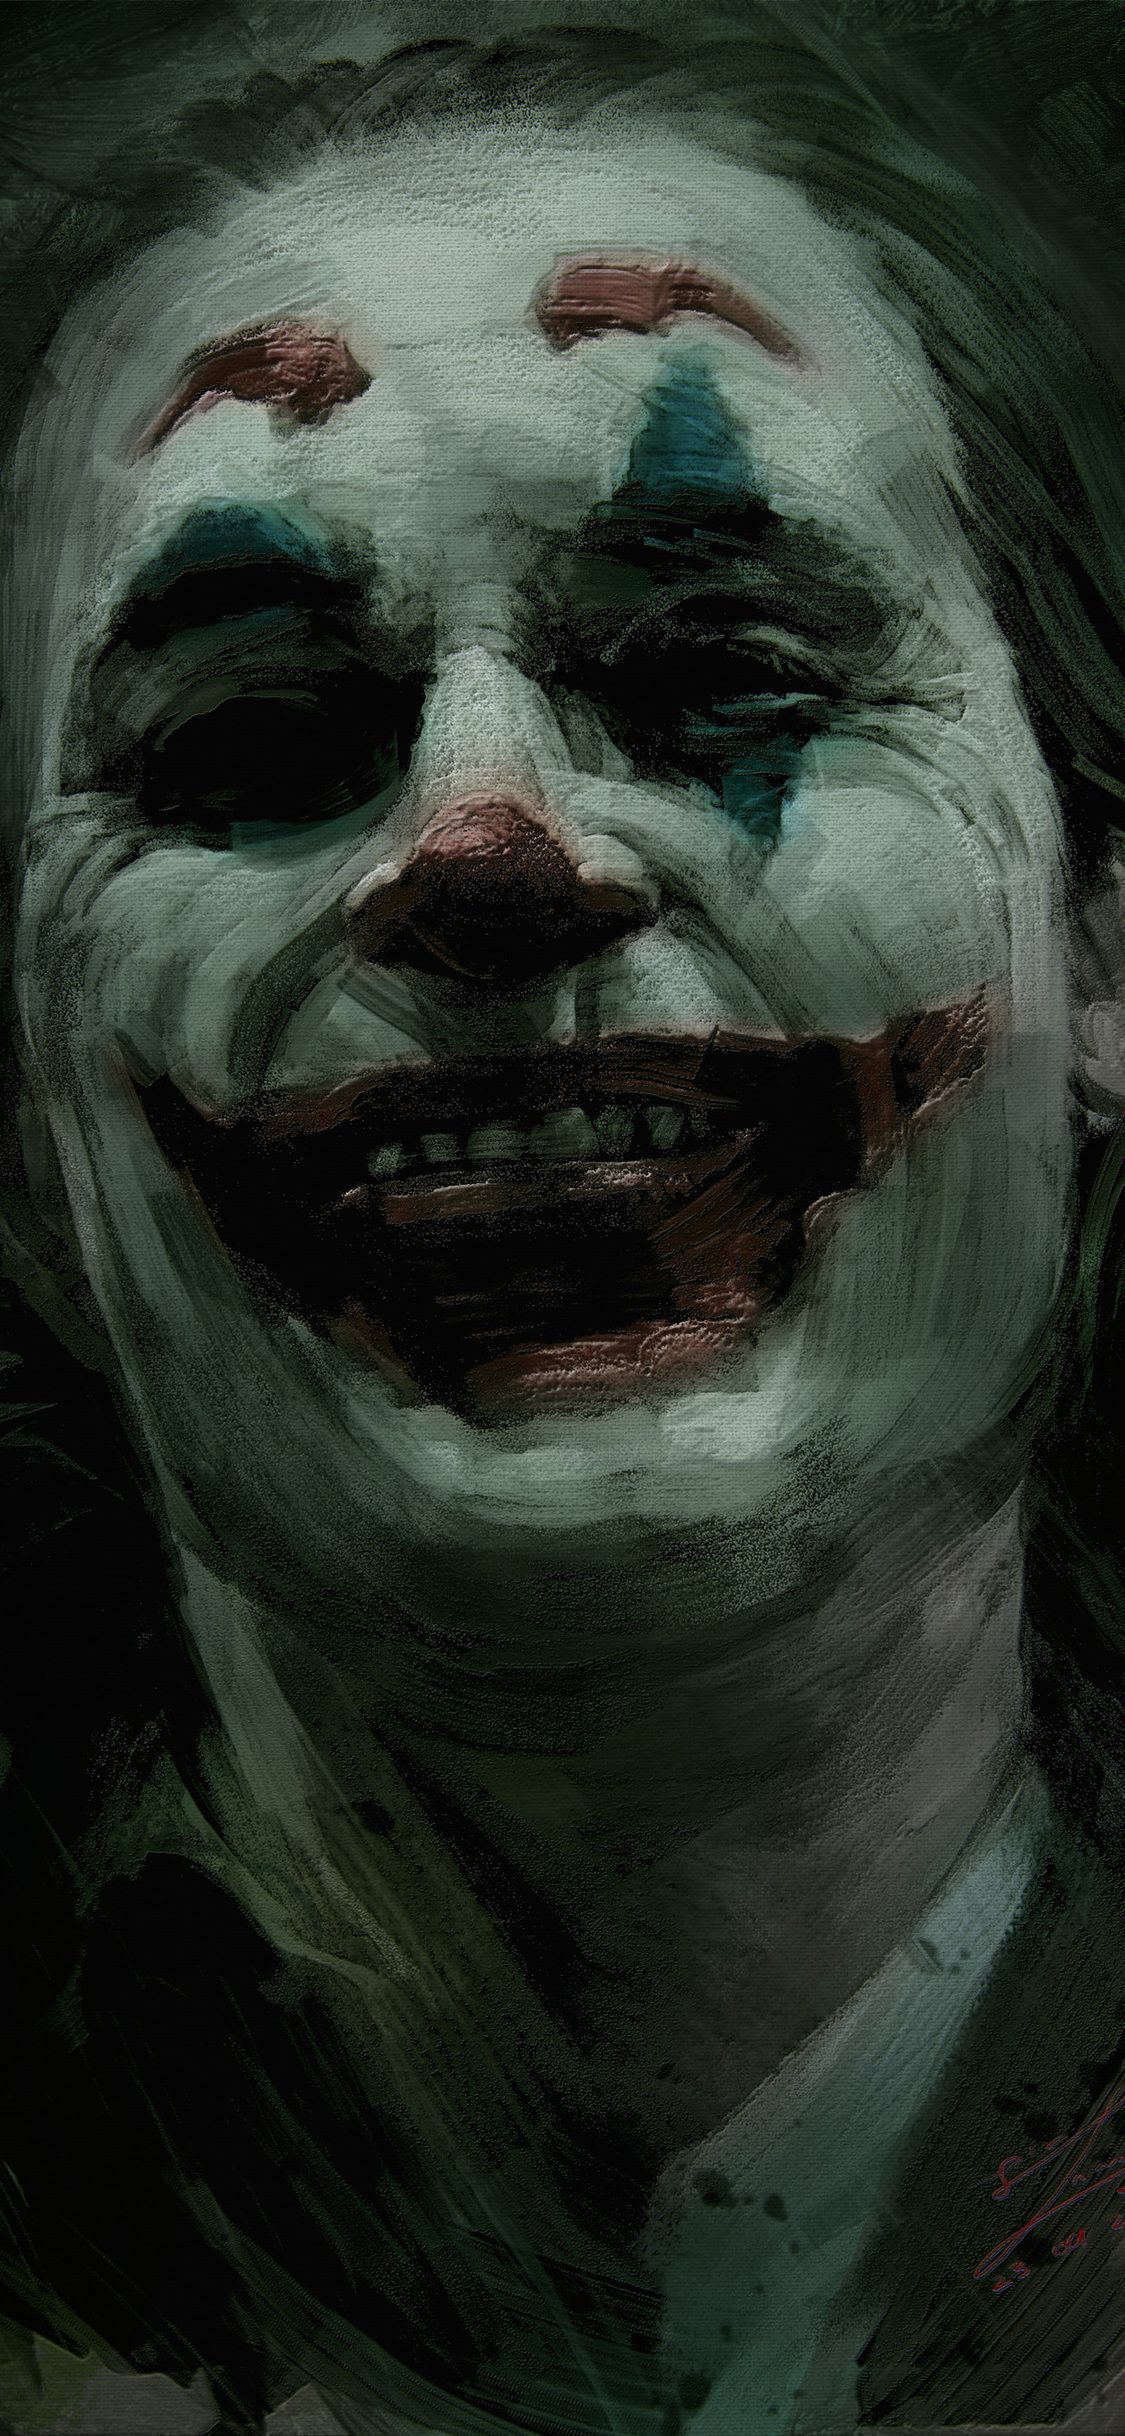 Joker 2 Wallpaper iPhone